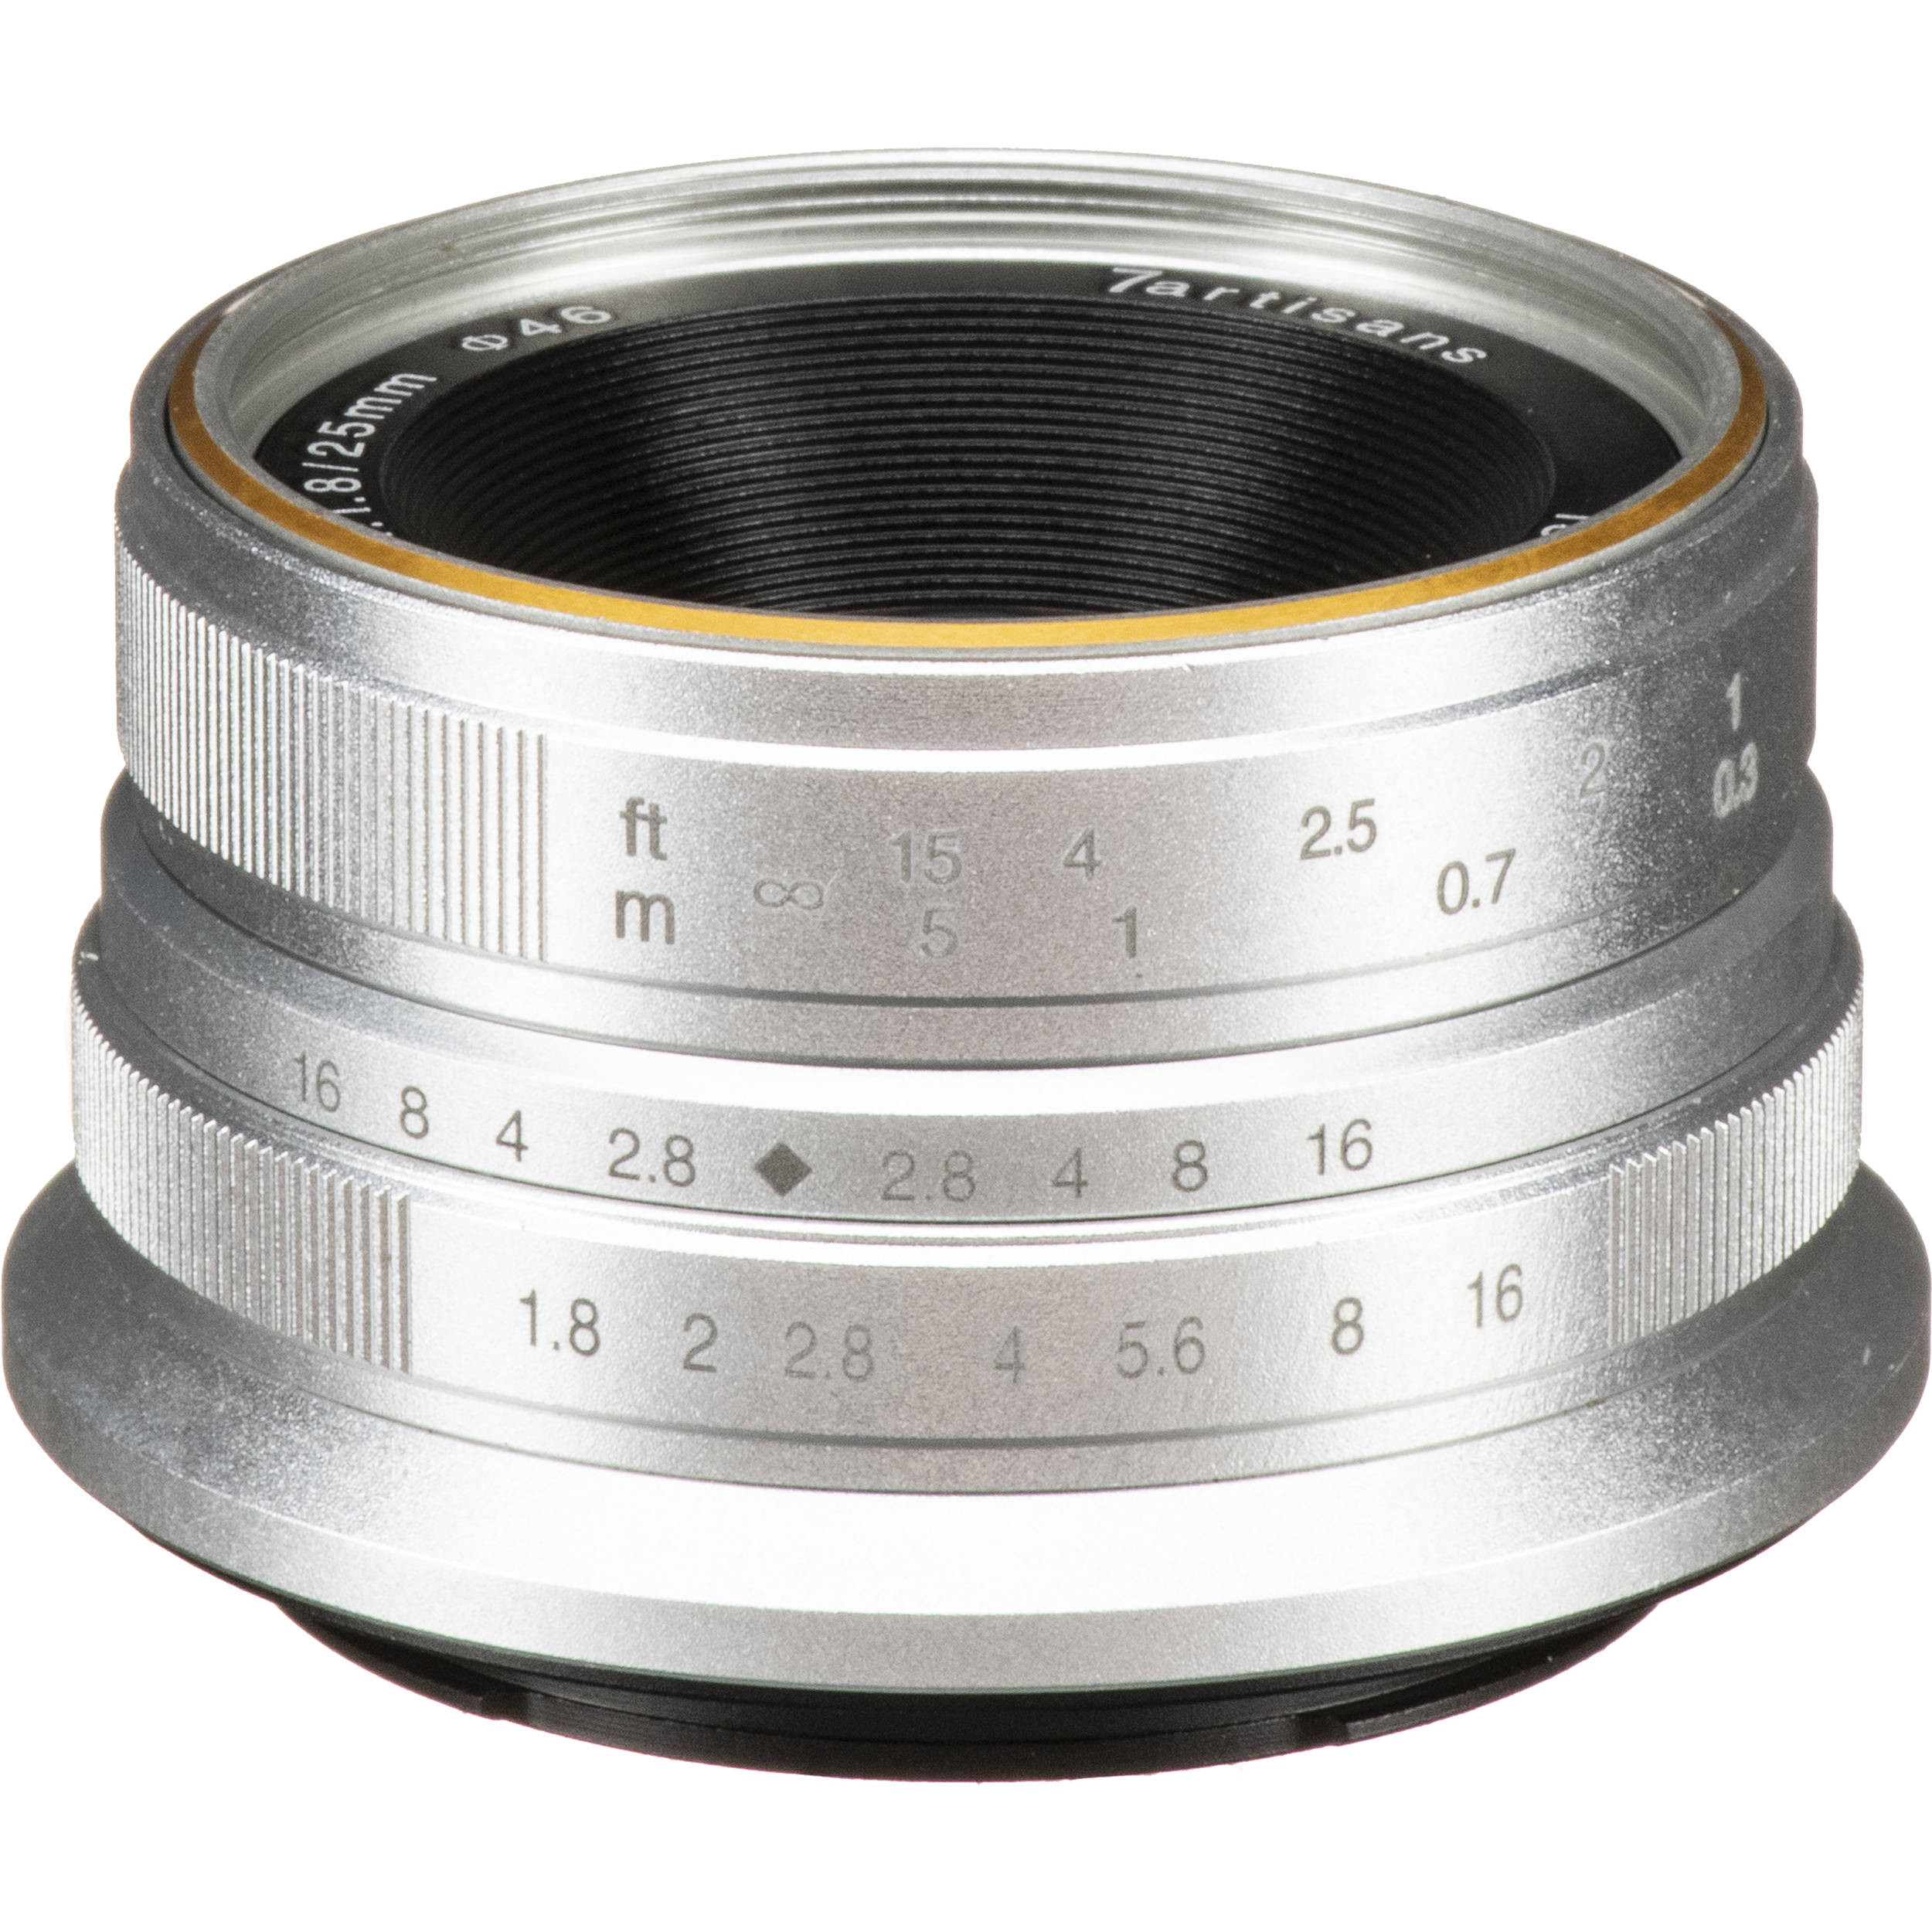 7Artisans 25mm f/1.8 Manual Focus Lens Silver (Fuji X Mount)